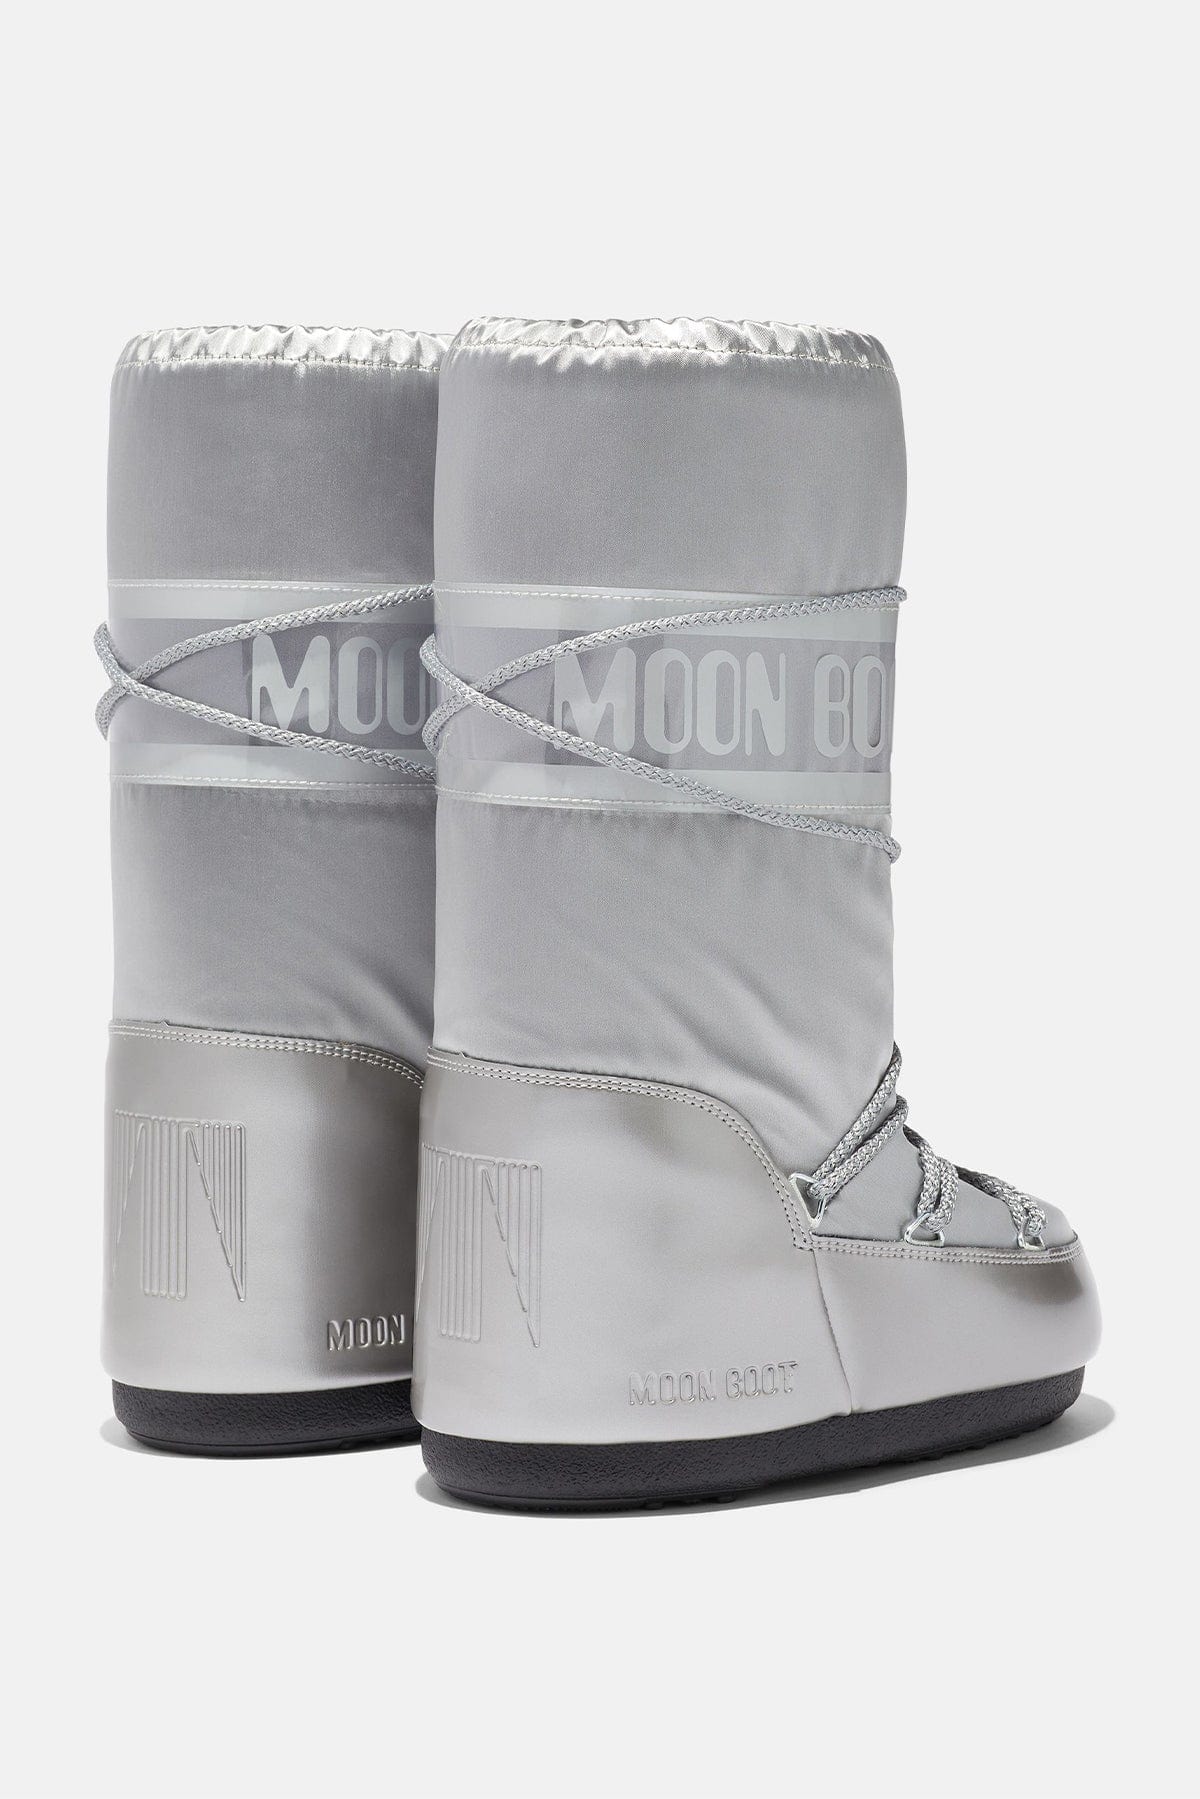 MOON BOOT CALZATURE  Moon Boot Alti Icon Glance